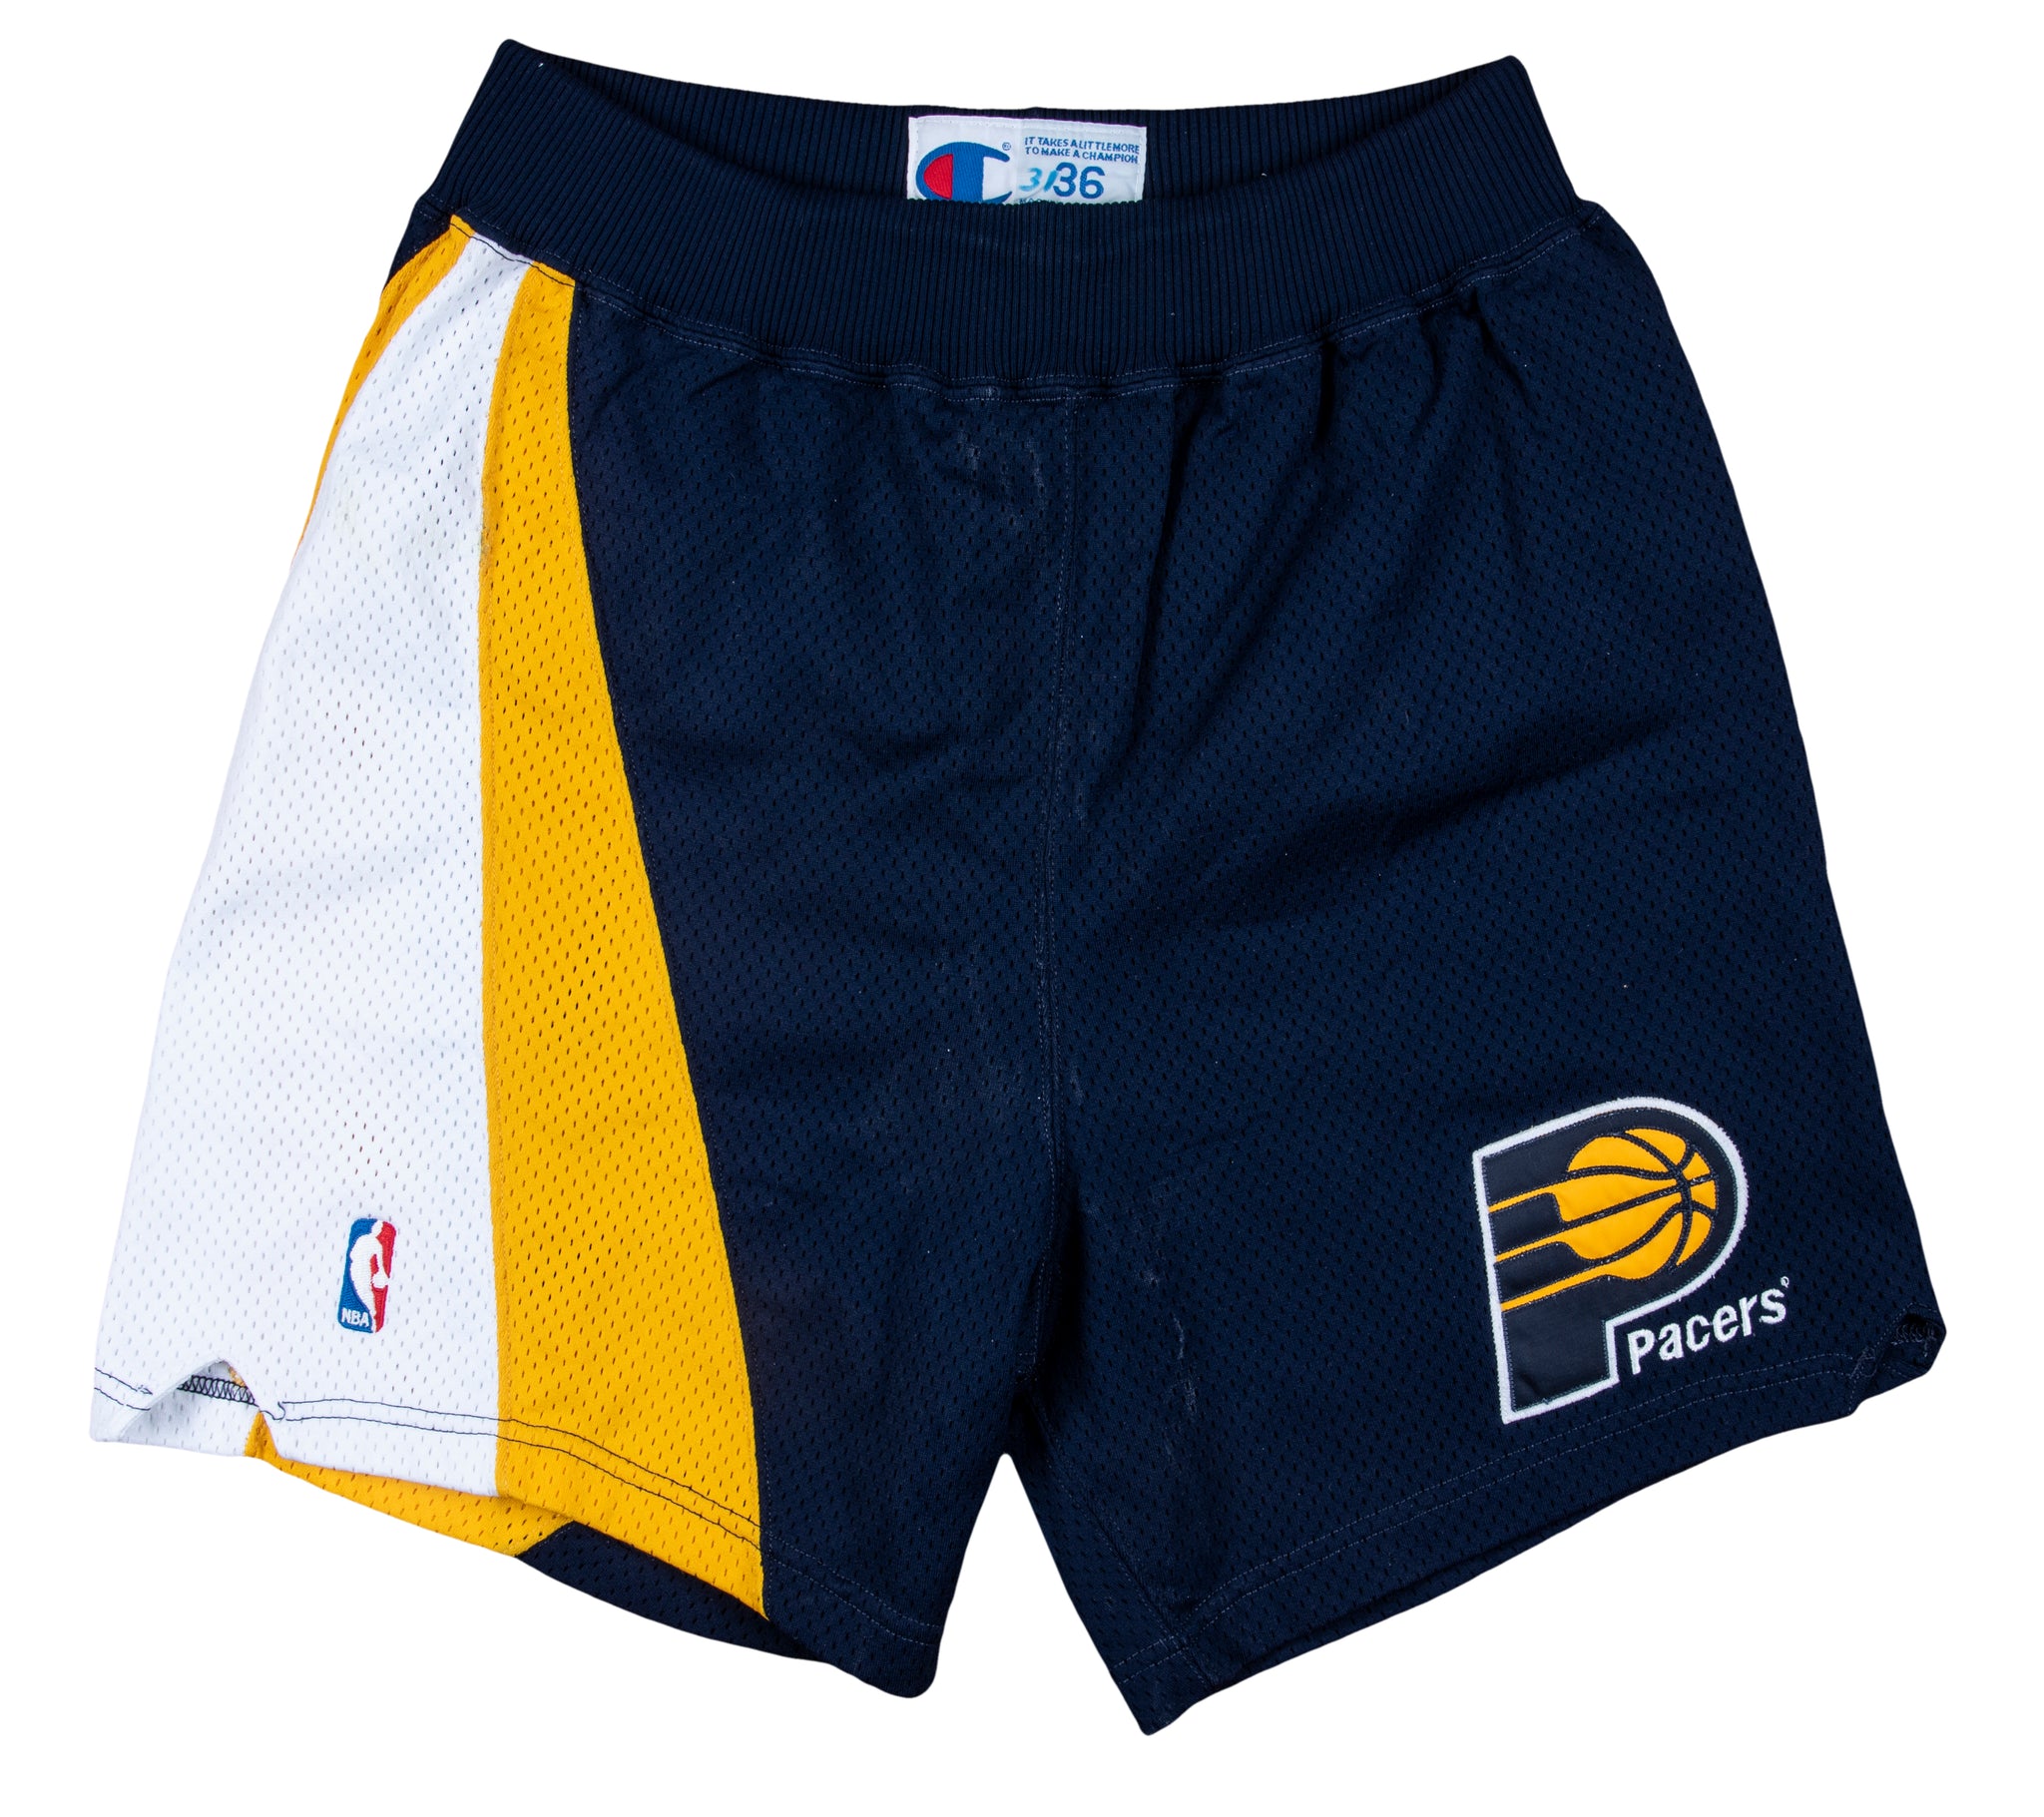 NBA Indiana Pacers Reggie Miller Adidas Hardwood - Depop